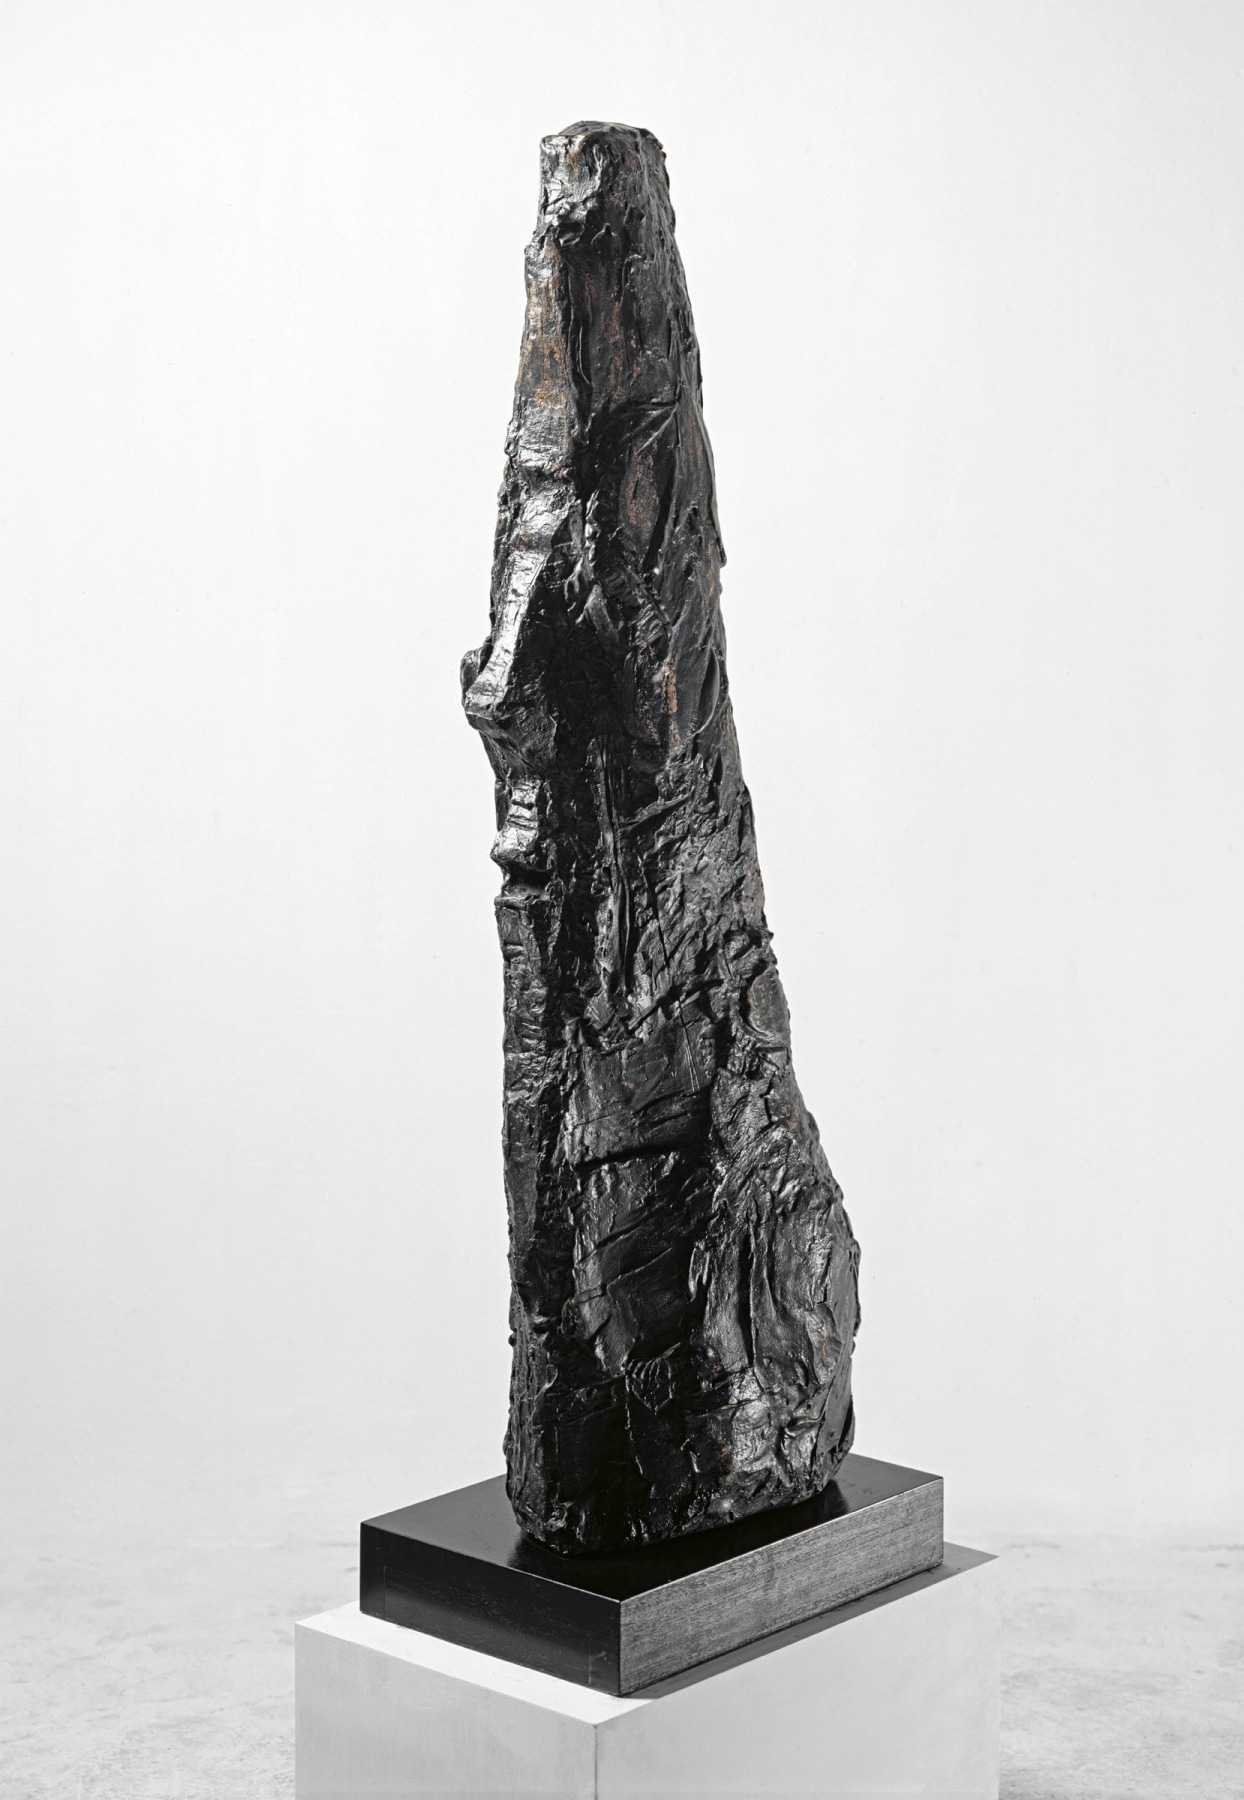 Per Kirkeby

&amp;ldquo;Arm und Kopf IV&amp;rdquo;, 1983

Bronze

From an edition of 6 + 1 AP

48&amp;nbsp;x 9 3/4 x 18 1/2 inches

122 x 25 x 47 cm

PKK 12/5